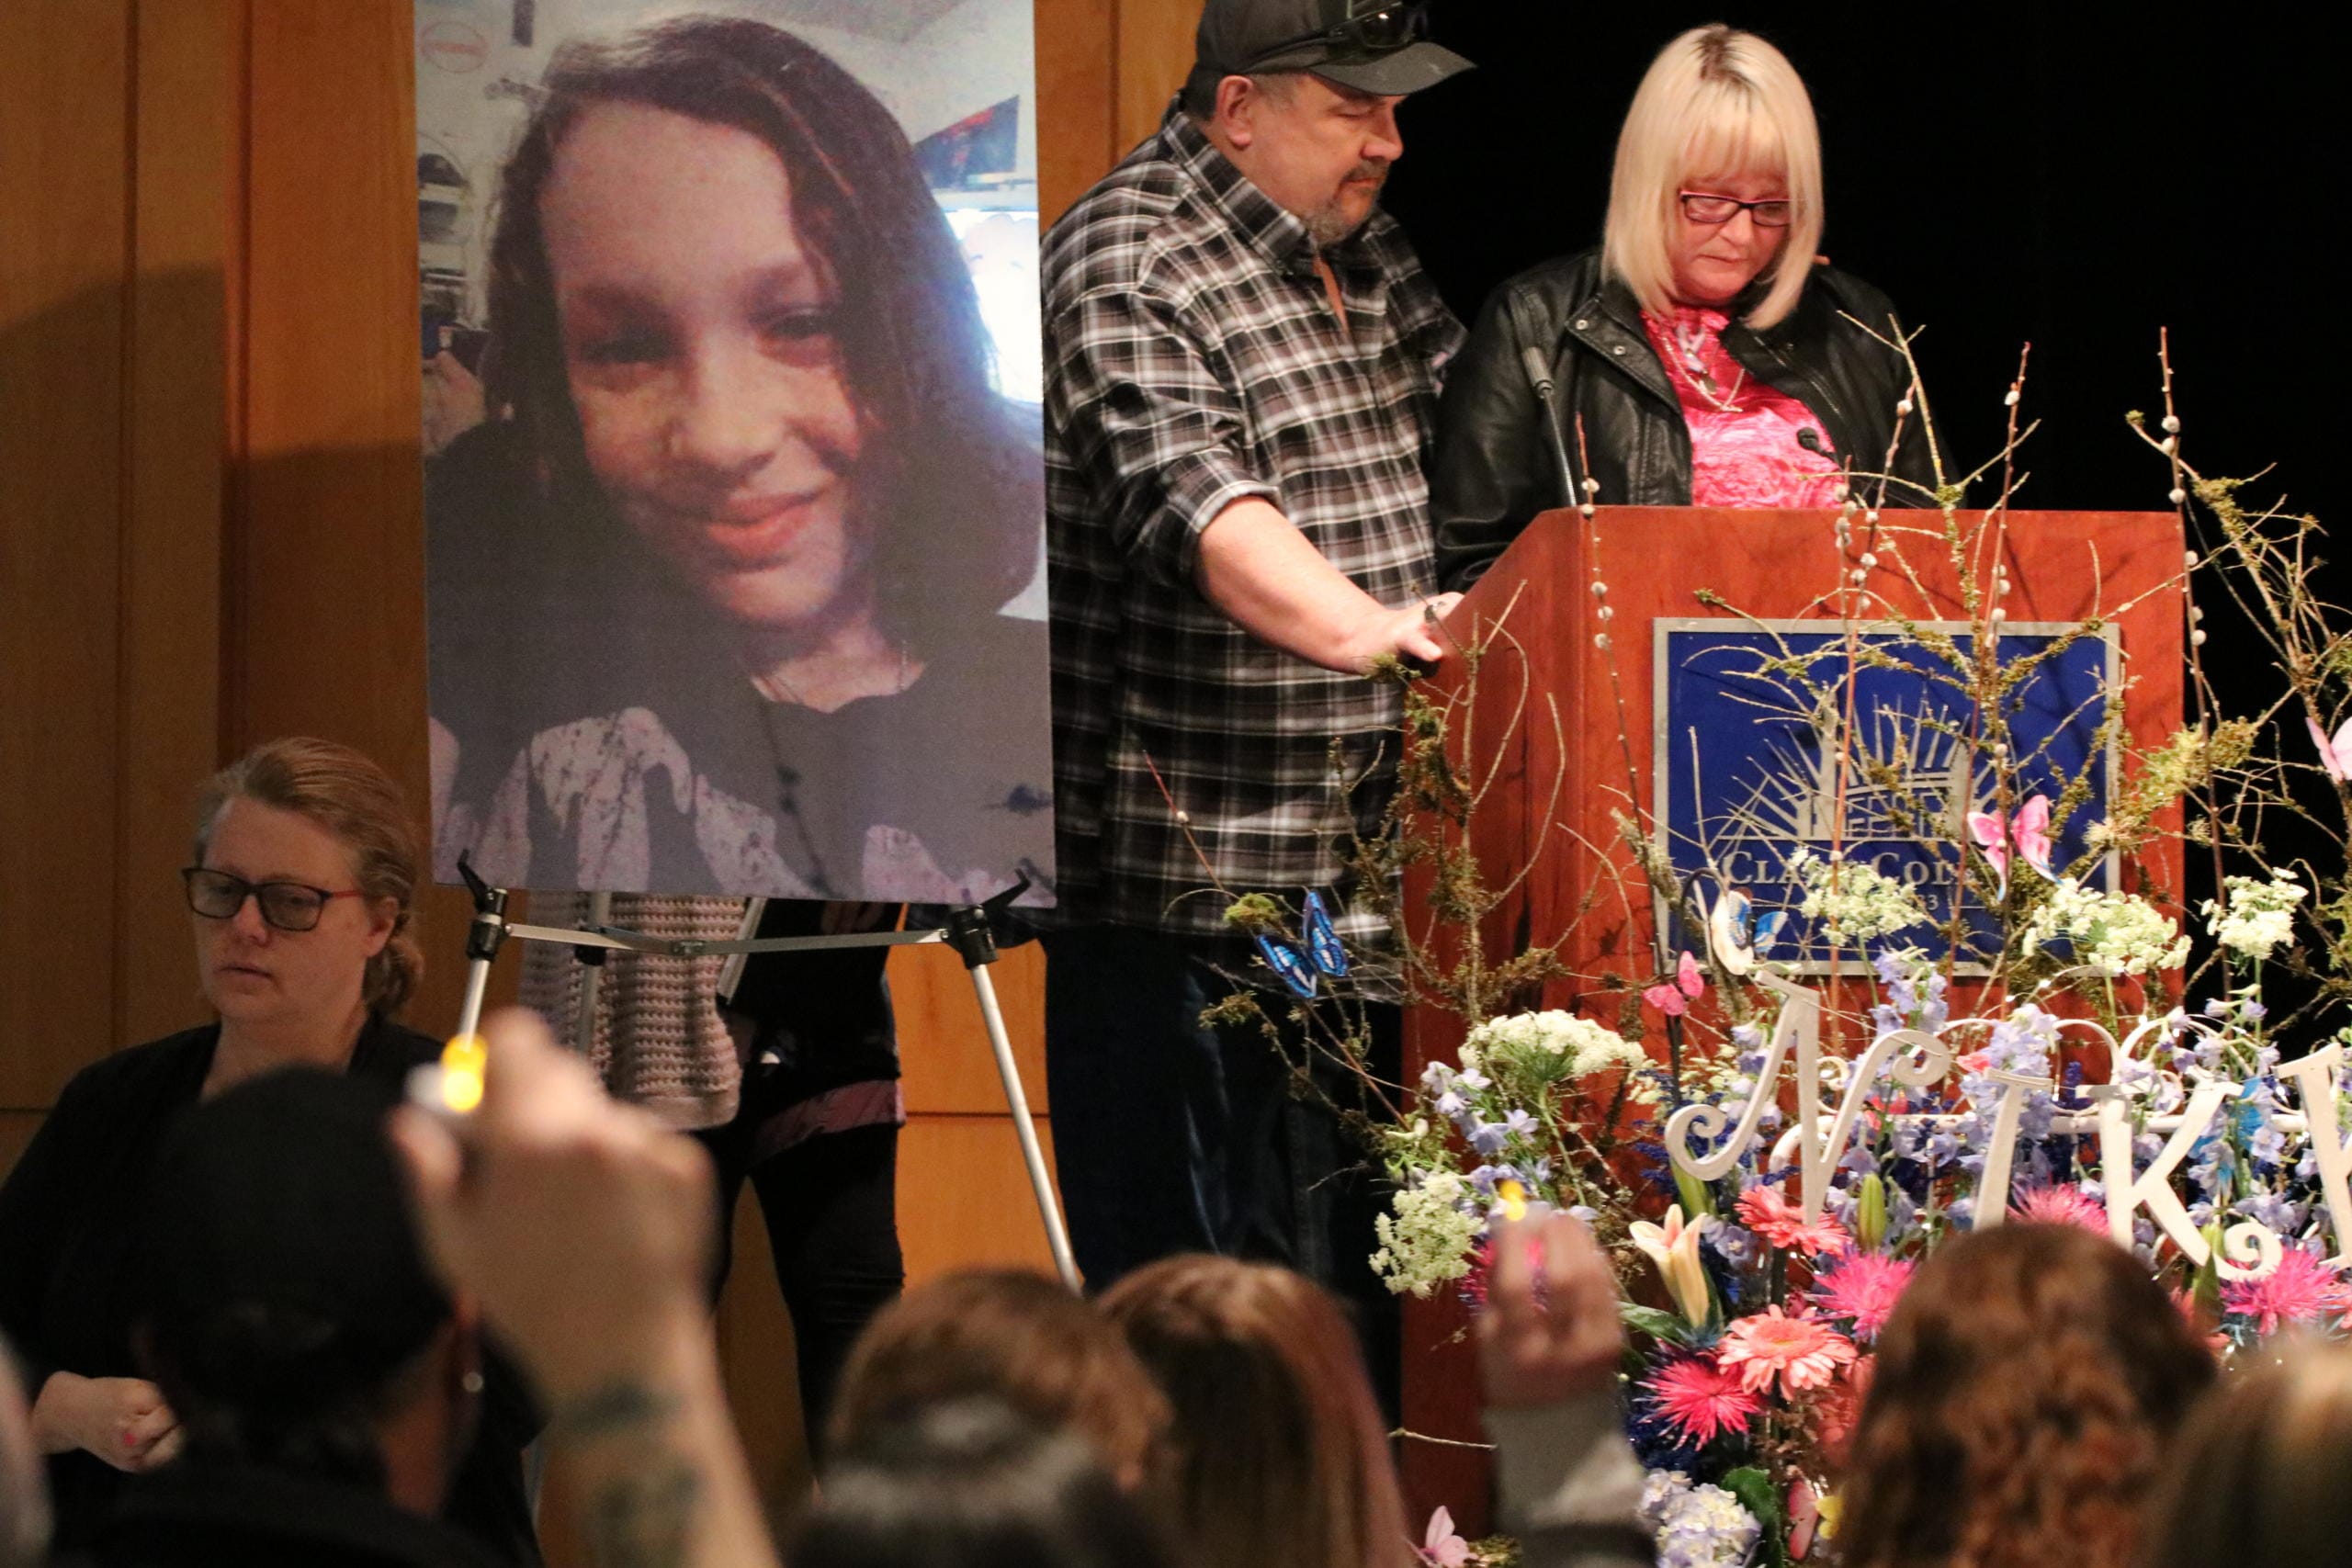 Nikki Kuhnhausen's memorial was held at Clark College Sunday evening March 1.